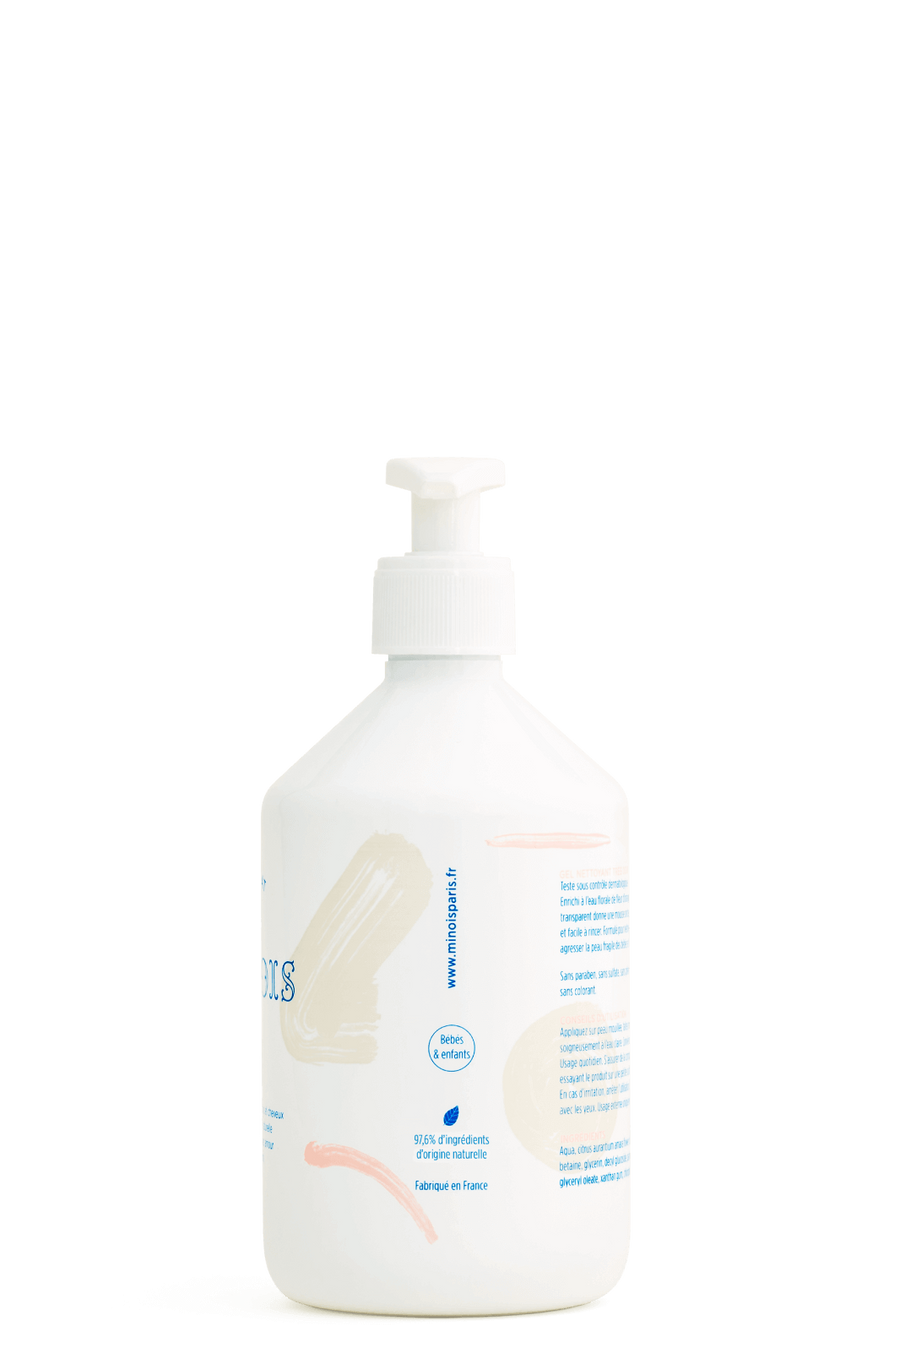 Minois - washing gel - hair and body - natural ingredients